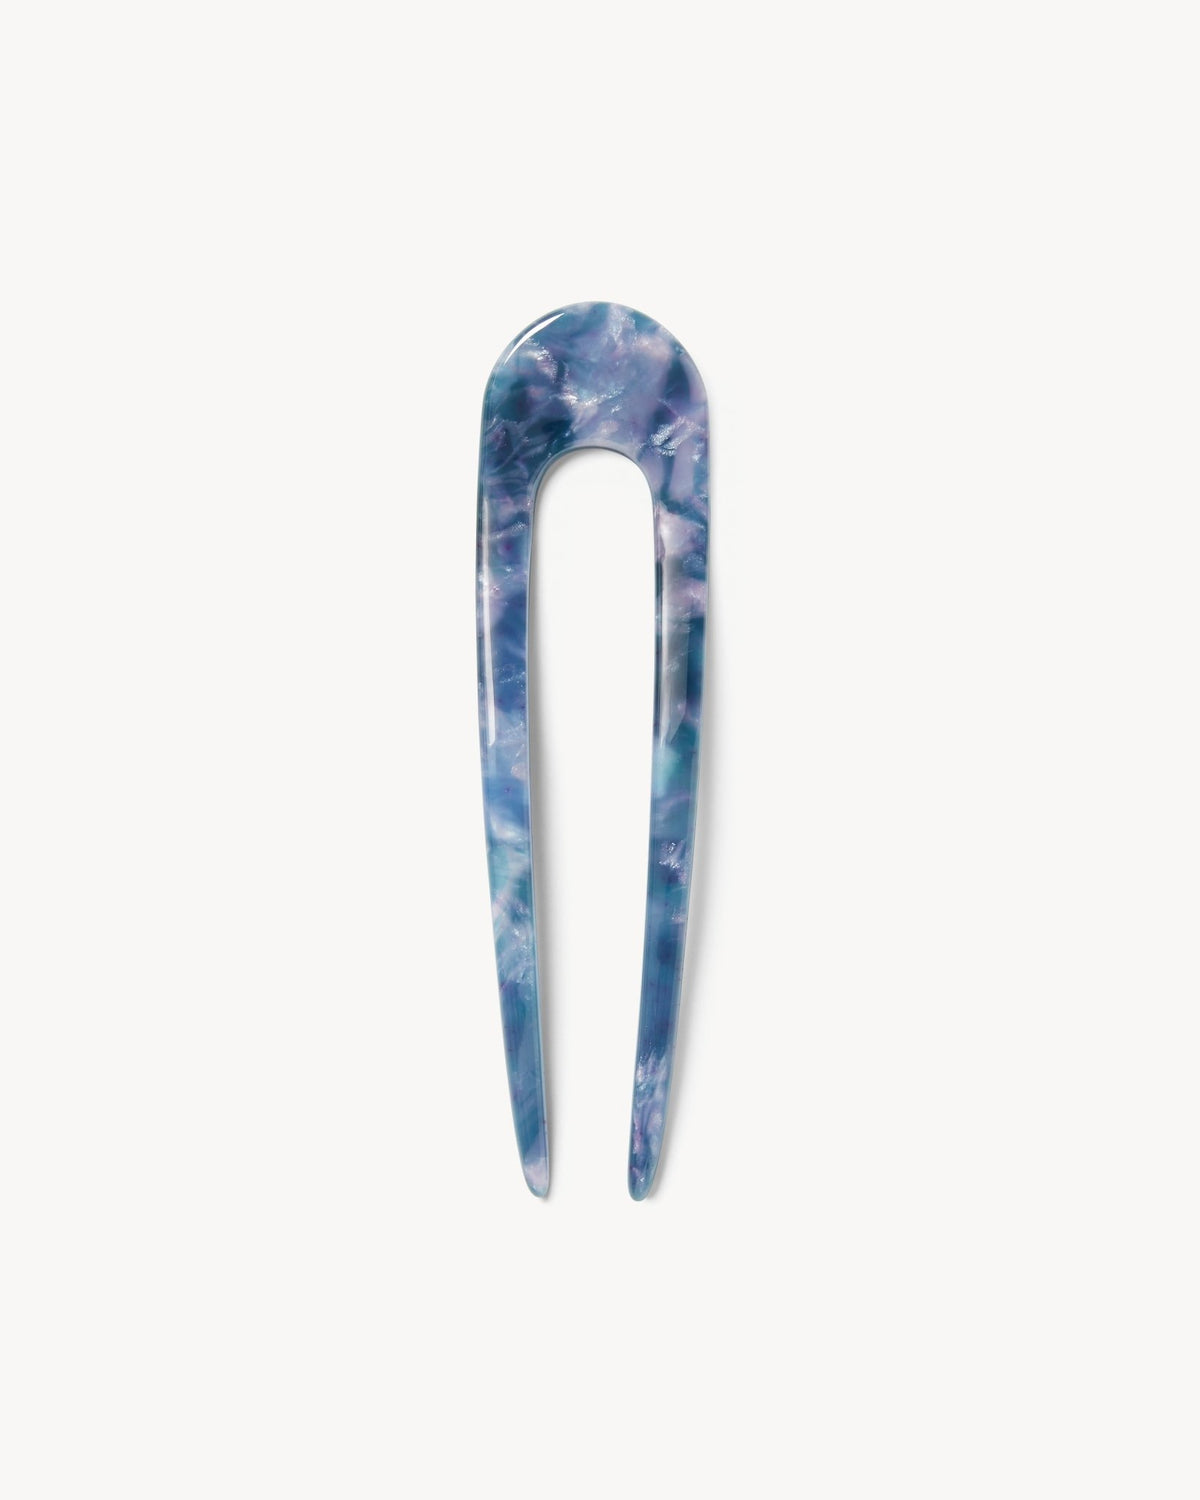 French Hair Pin in Cosmic Blue - MACHETE